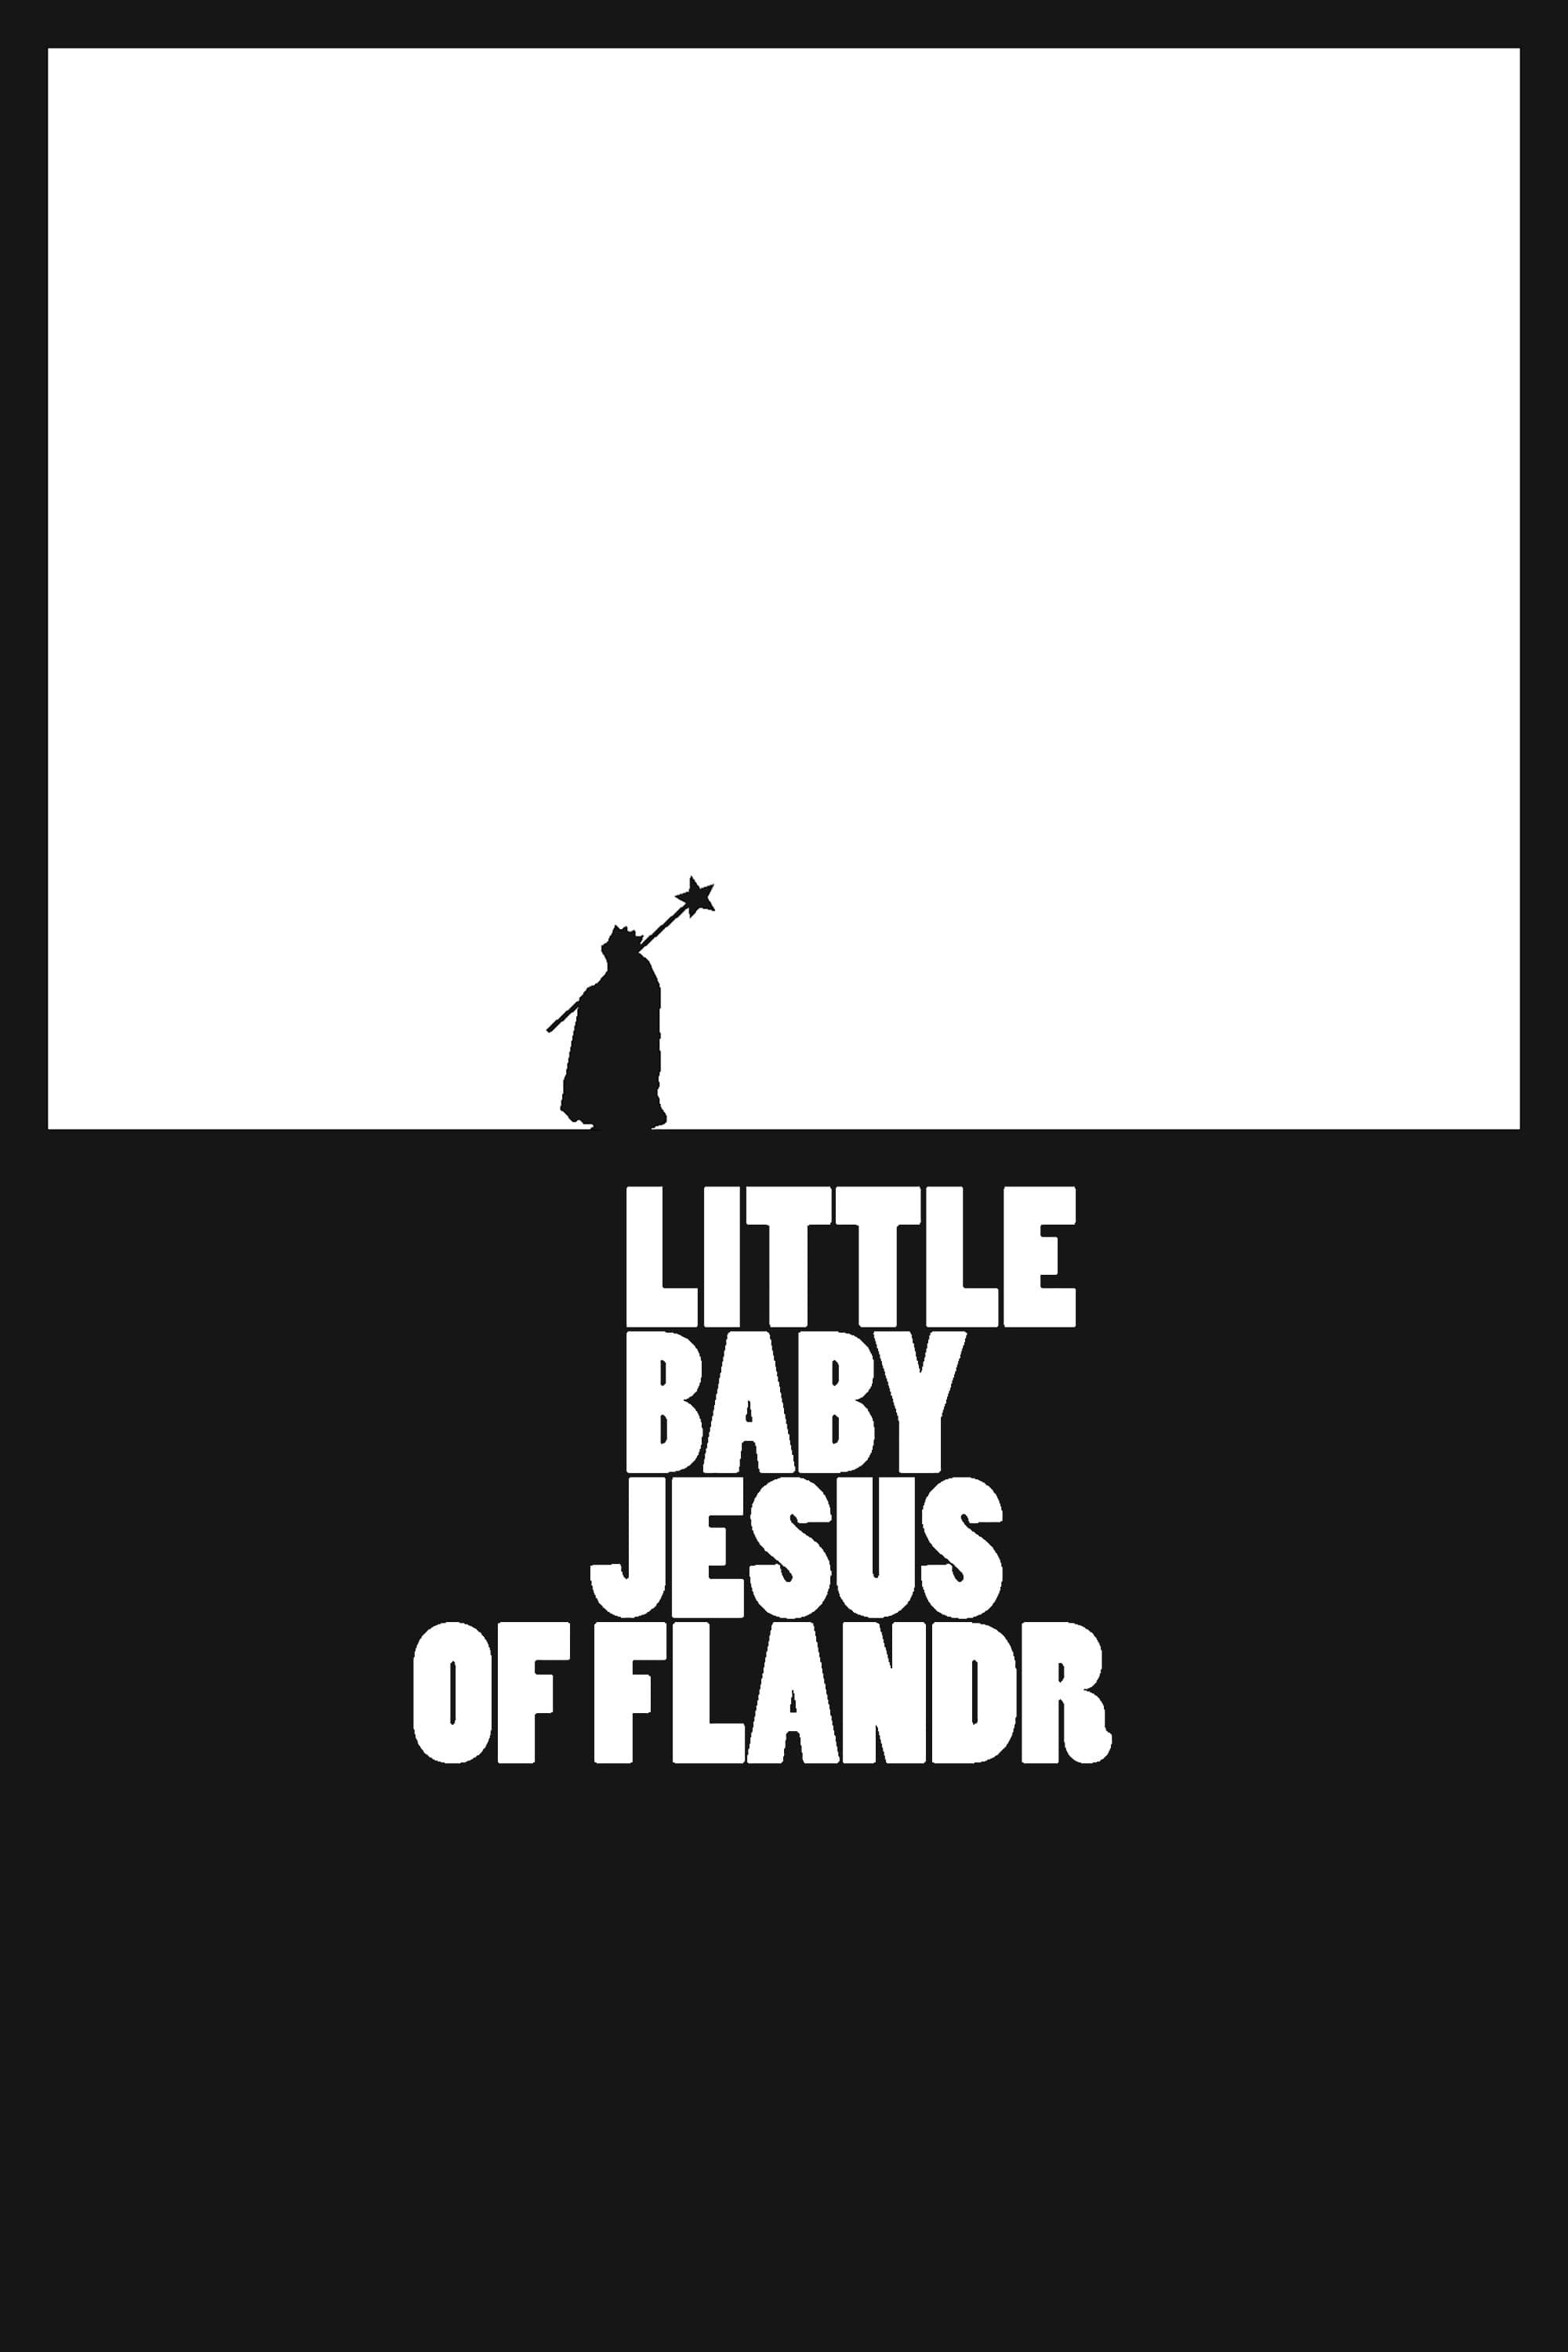 Little Baby Jesus of Flandr poster